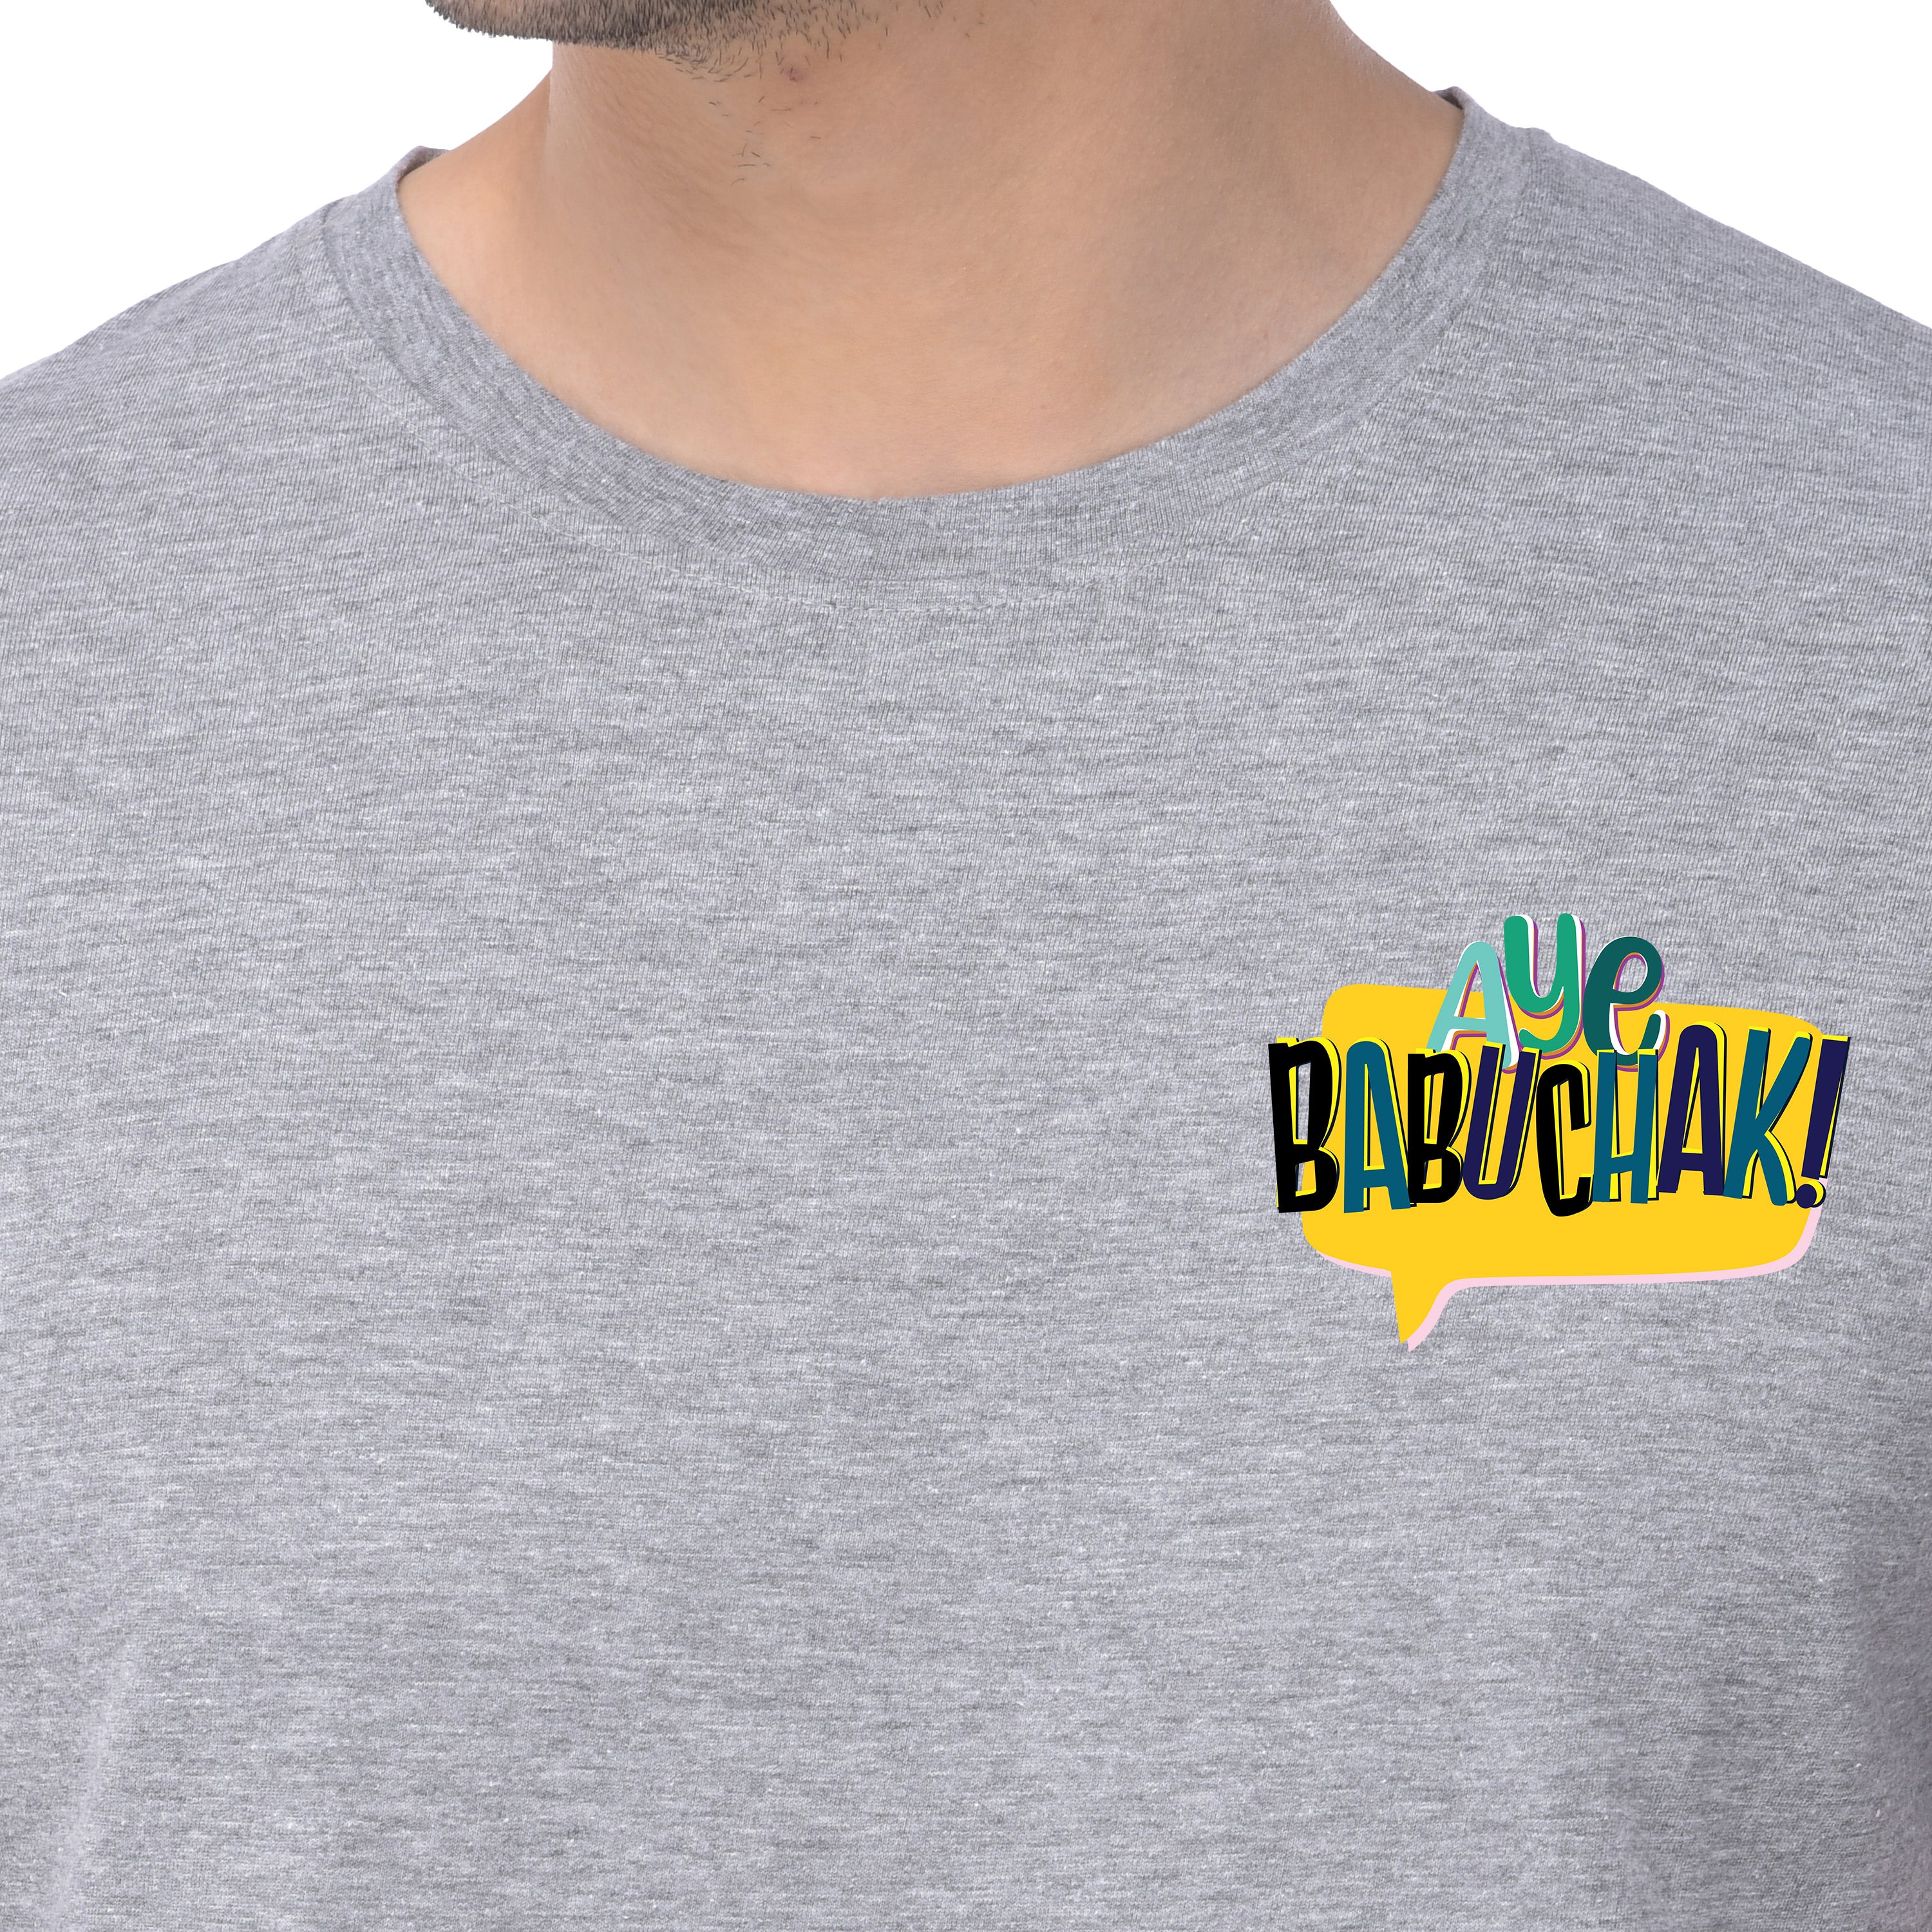 Aye Babuchak-Champaklal Grey T-shirt